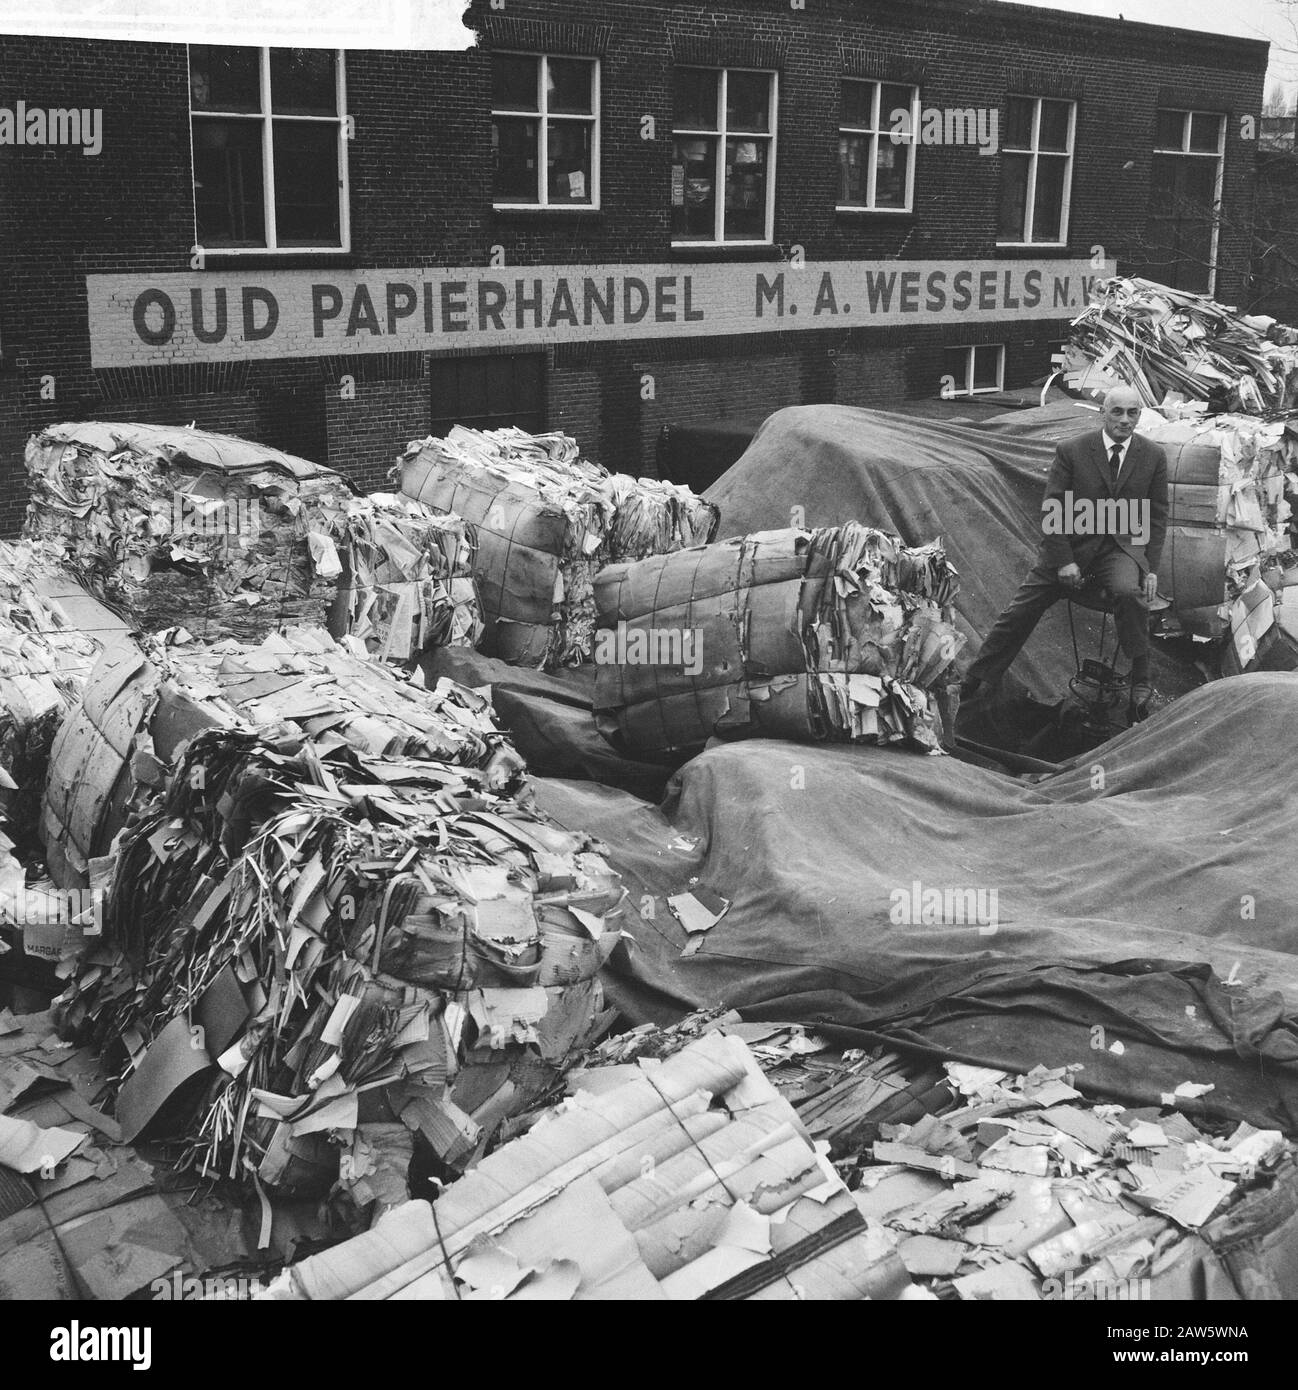 Mission Telegraph: Altpapierhändler Wessels. Papierstapel Datum: 12. November 1961 Stichwörter: Papier, Ballen Stockfoto